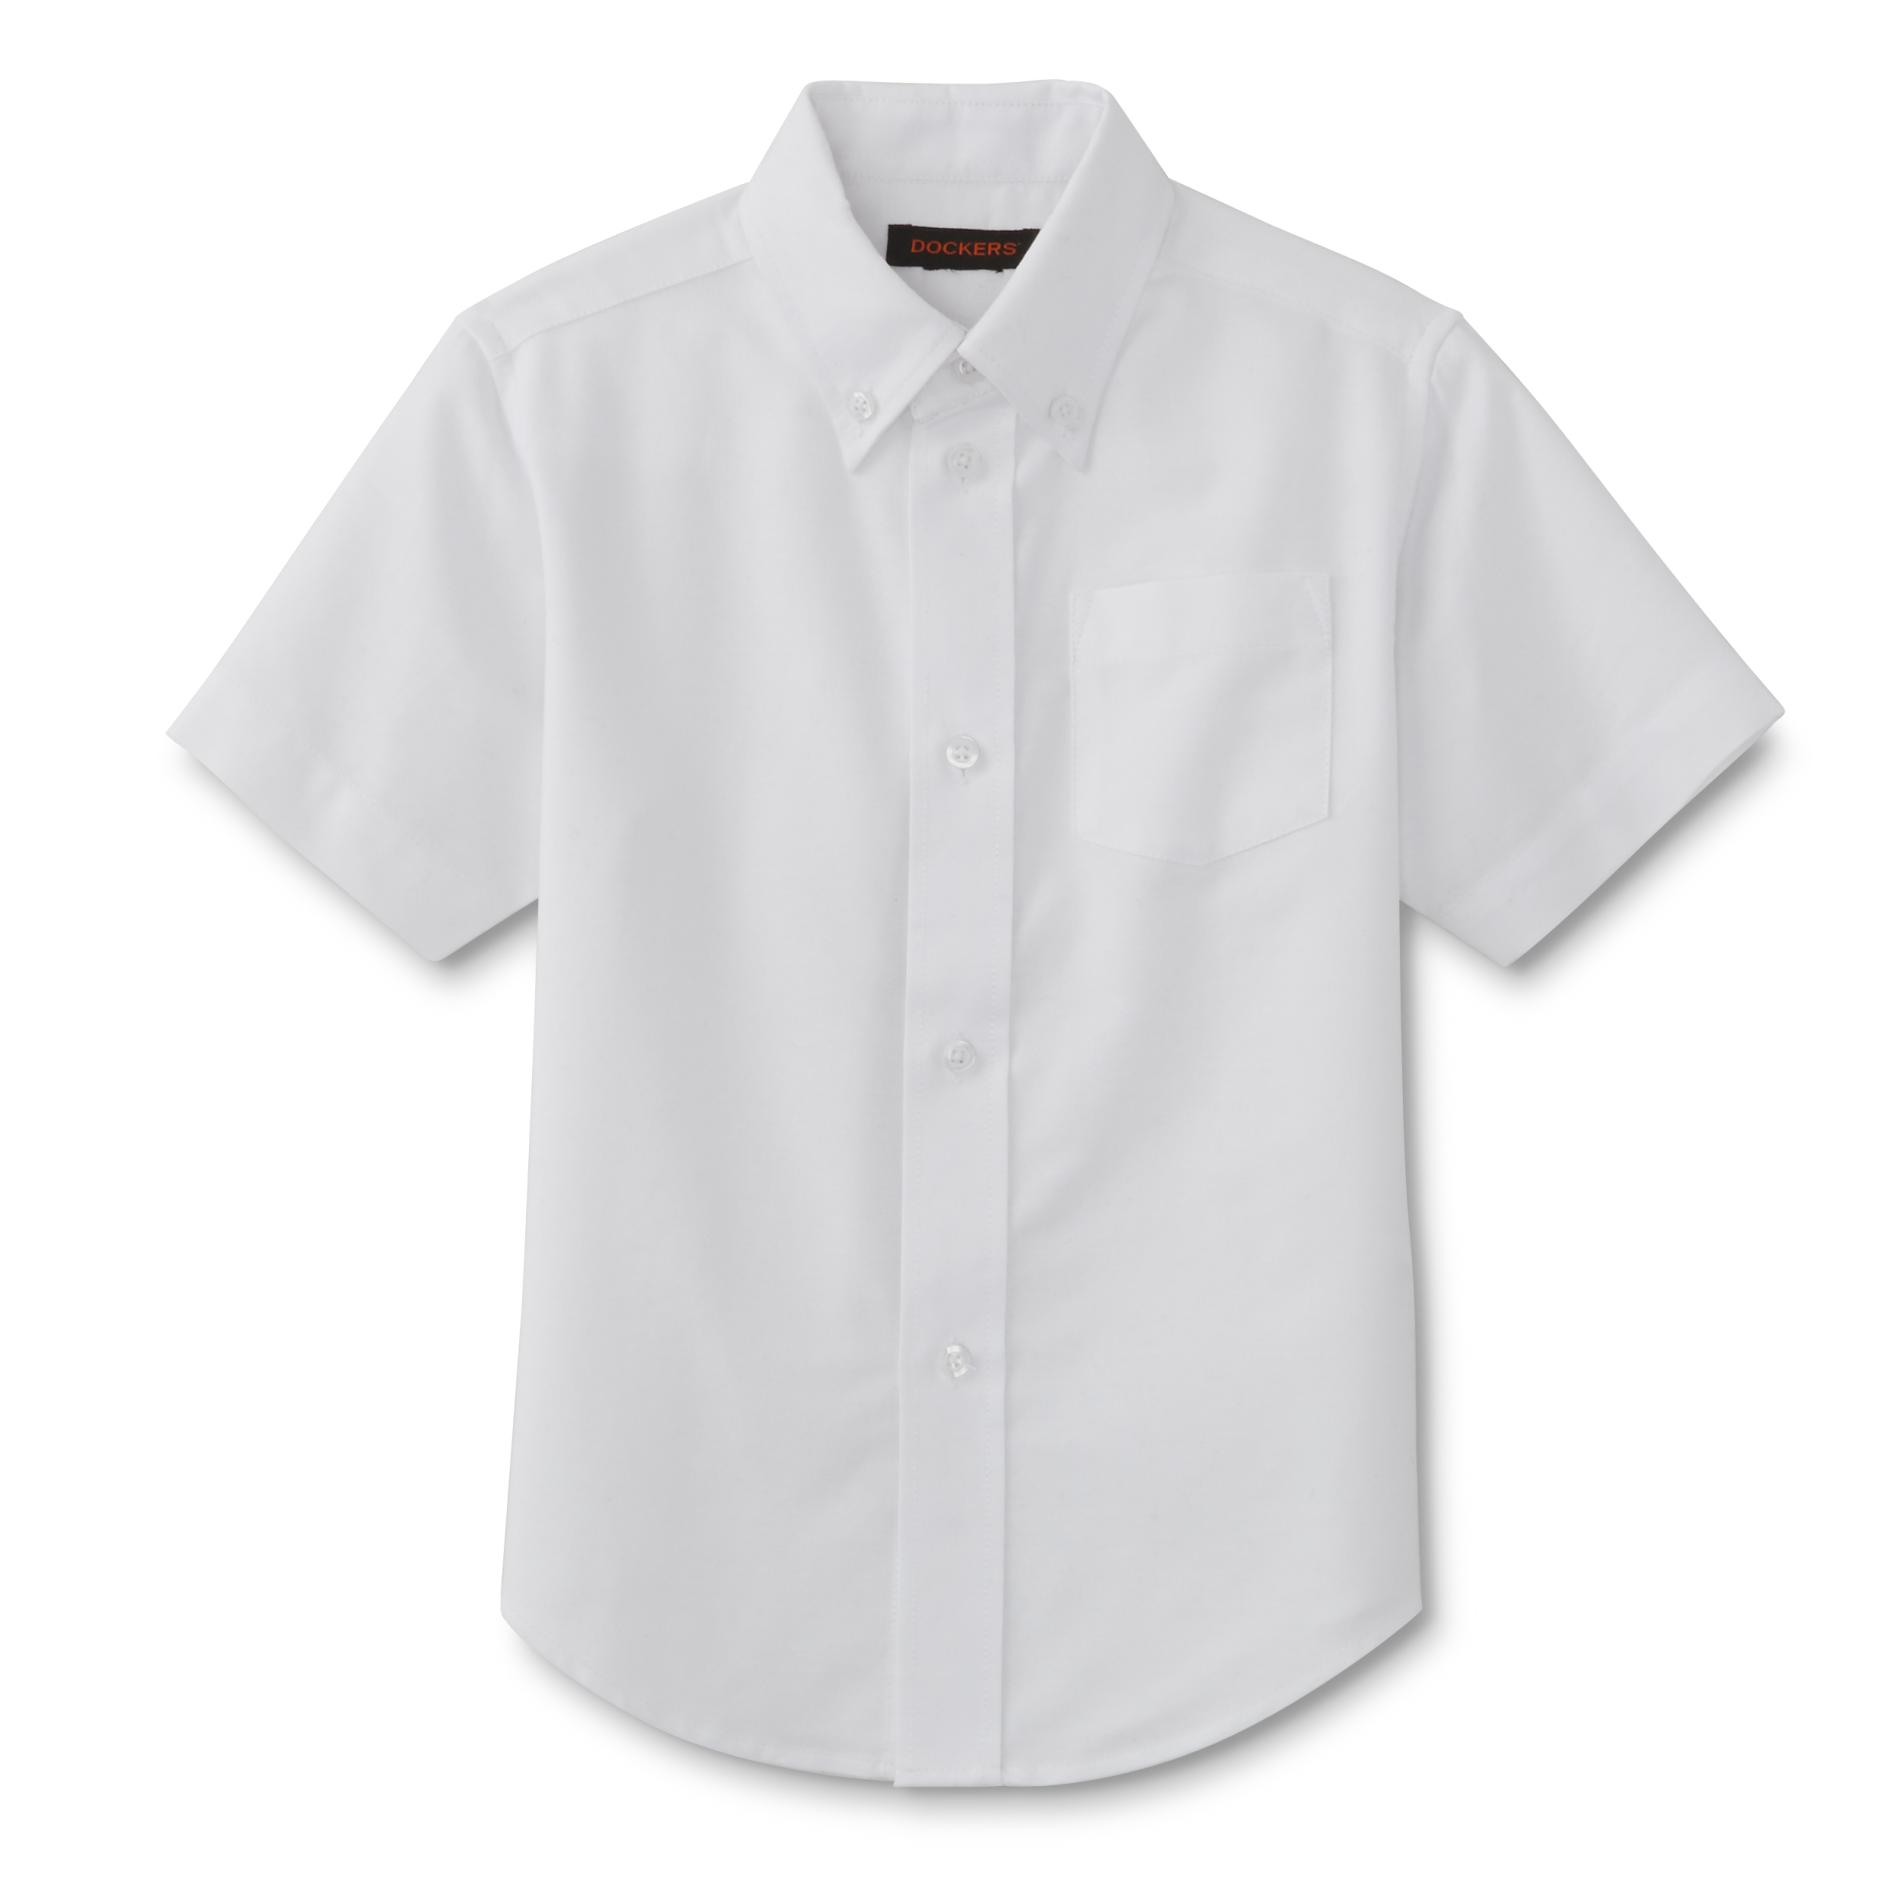 Dockers Boy's Short-Sleeve Oxford Shirt